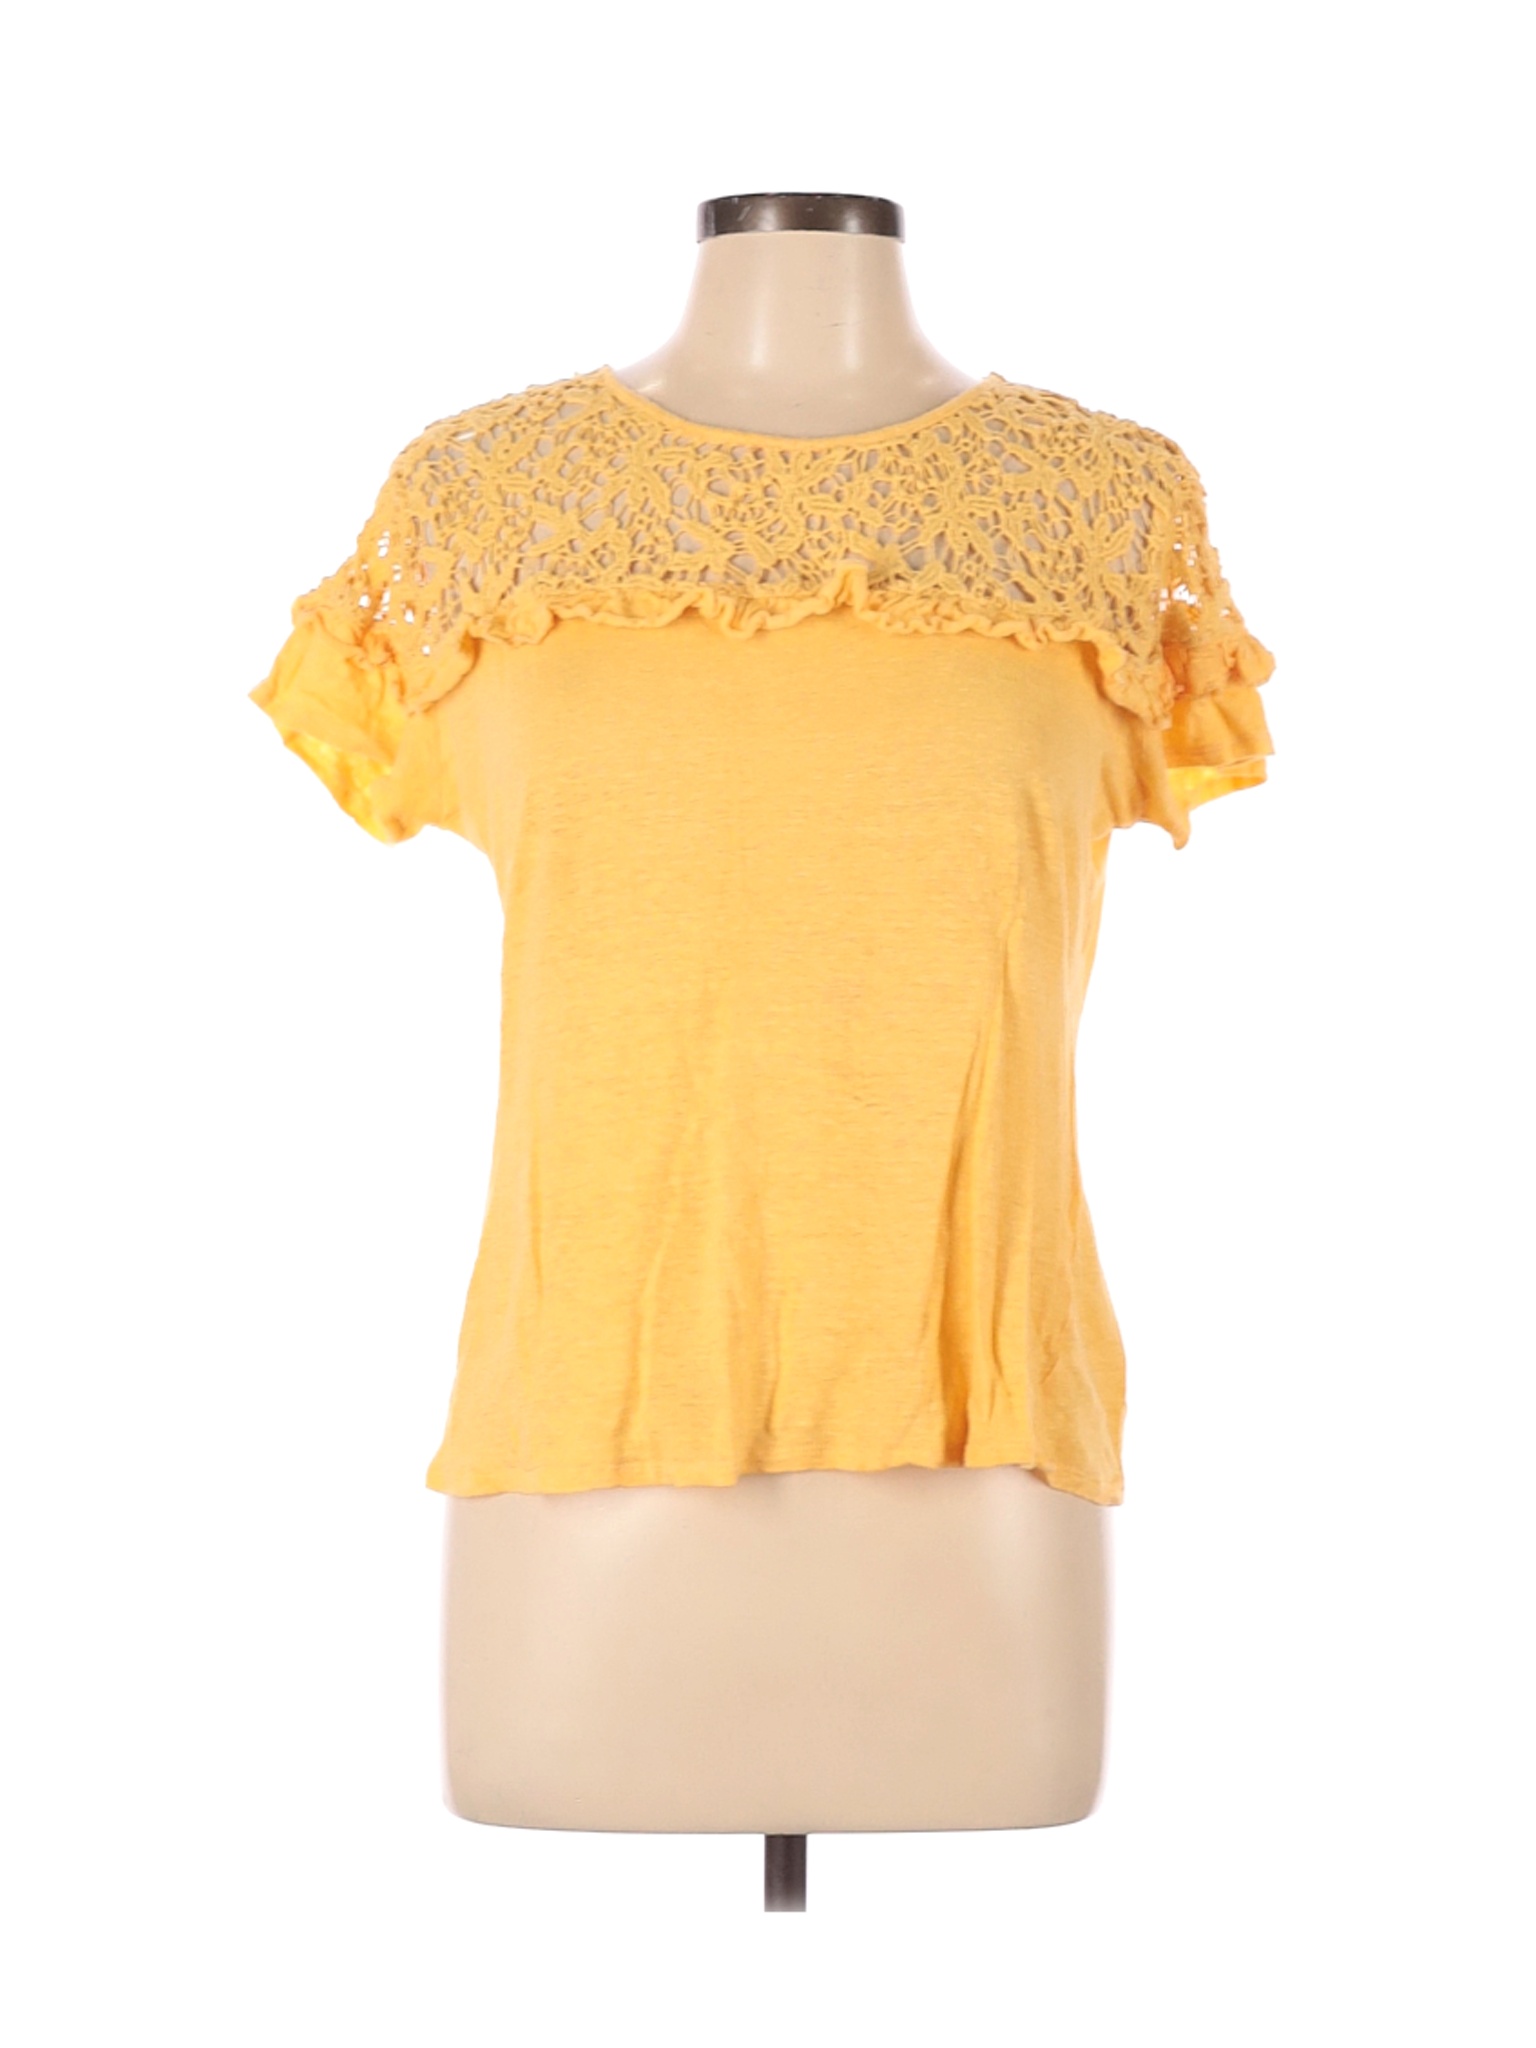 Sundance Women Yellow Short Sleeve Top L | eBay